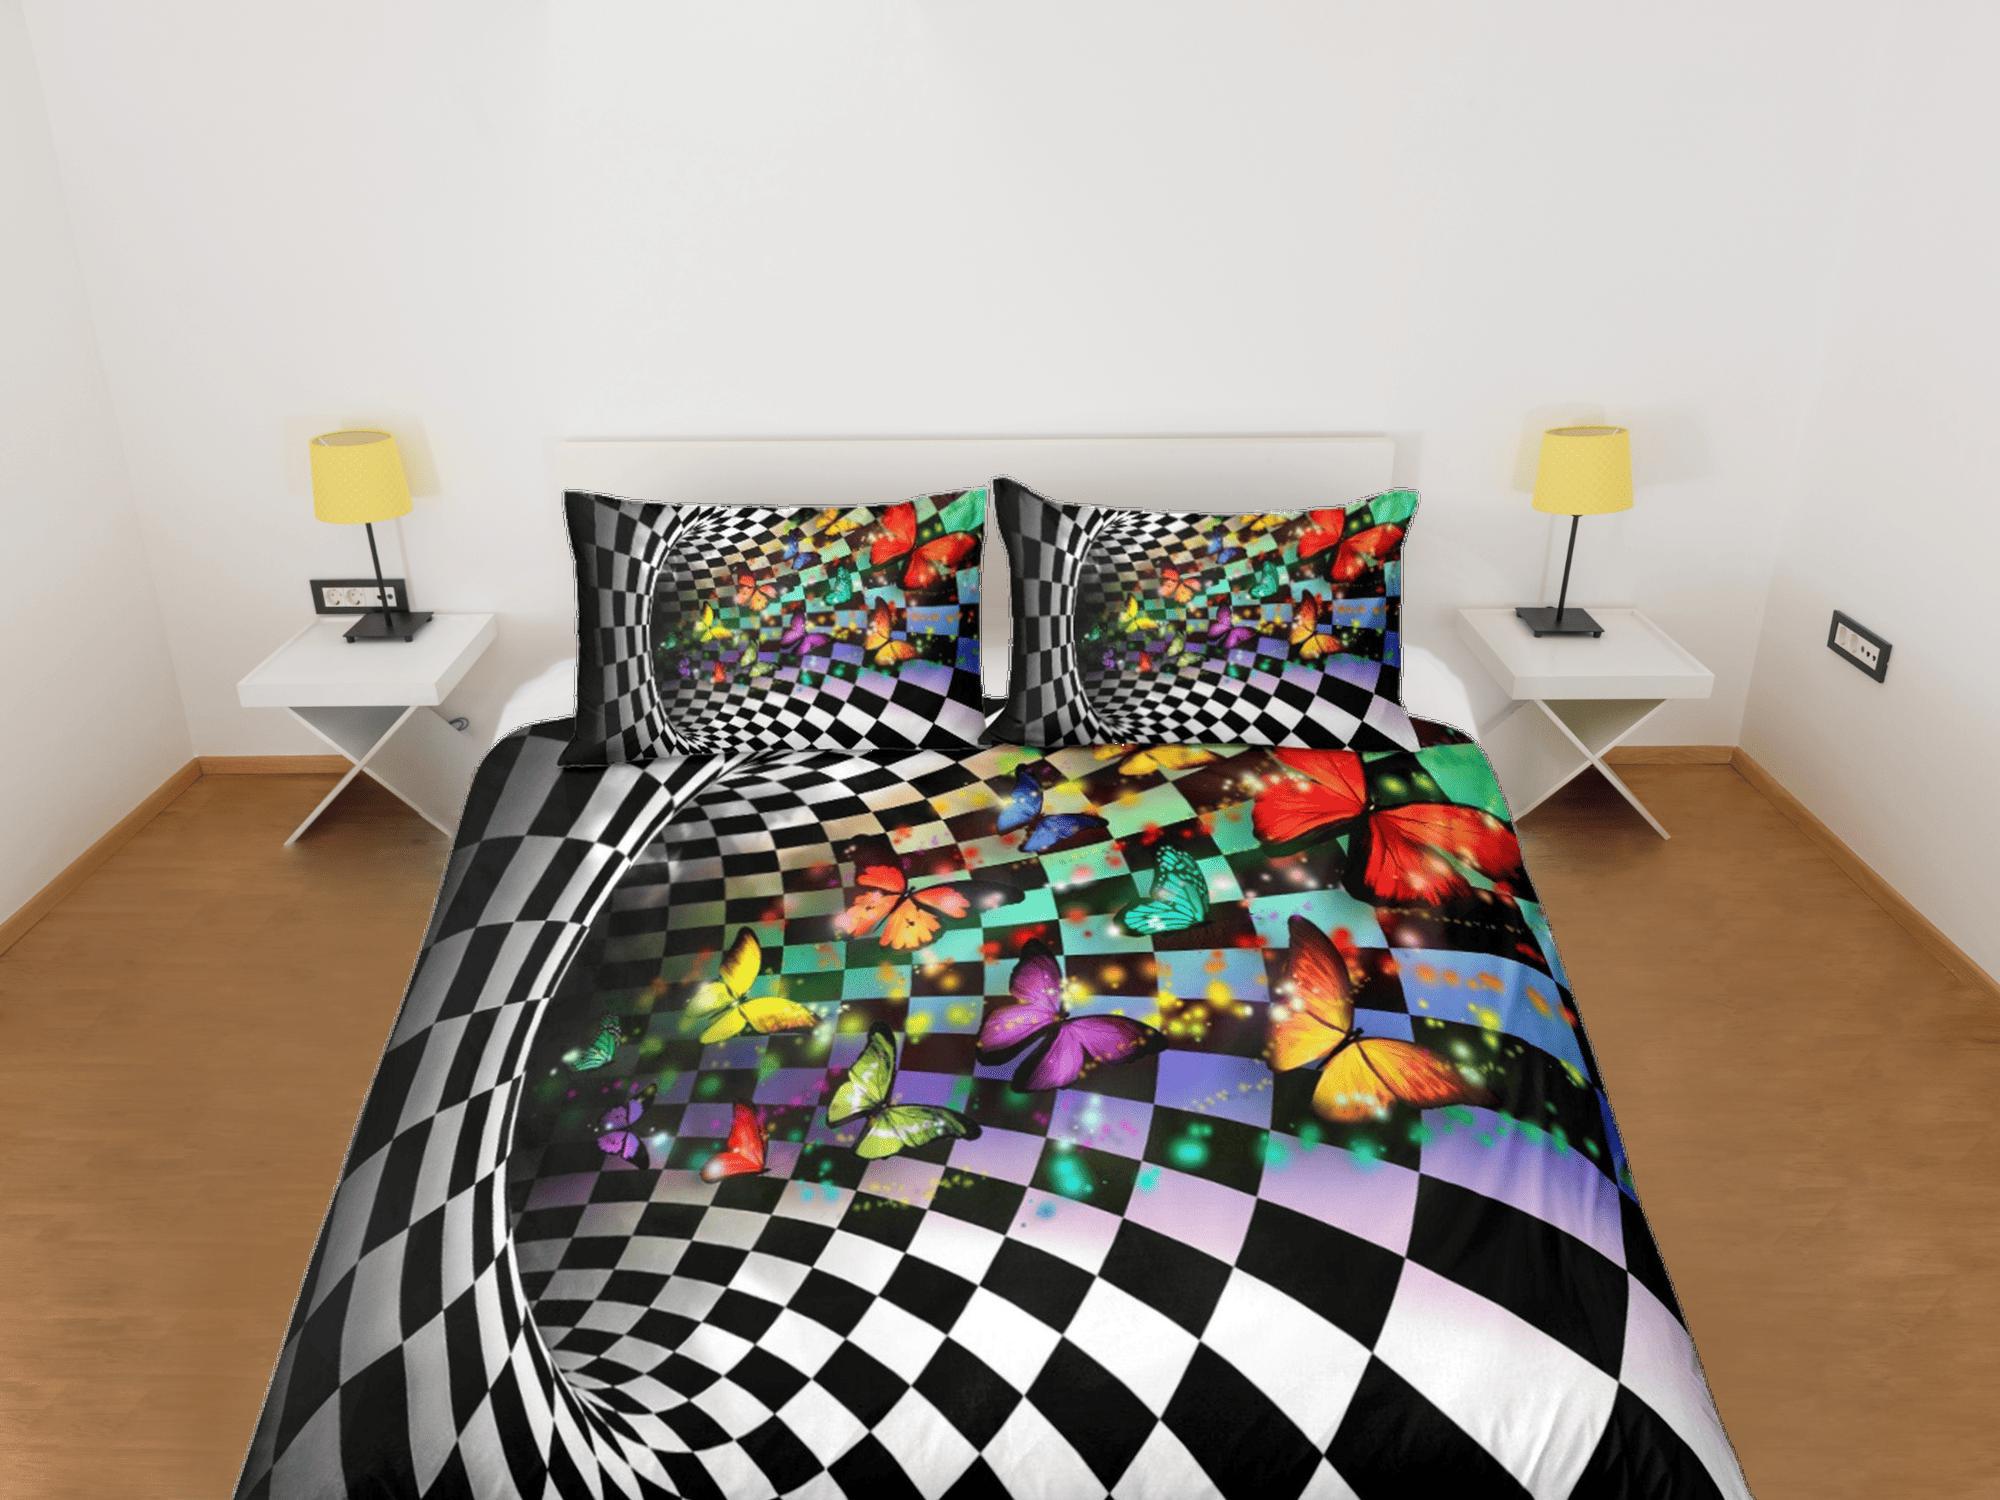 daintyduvet Checkered Fabric Duvet Cover Colorful Dorm Bedding Set Full Checkered Comforter Cover